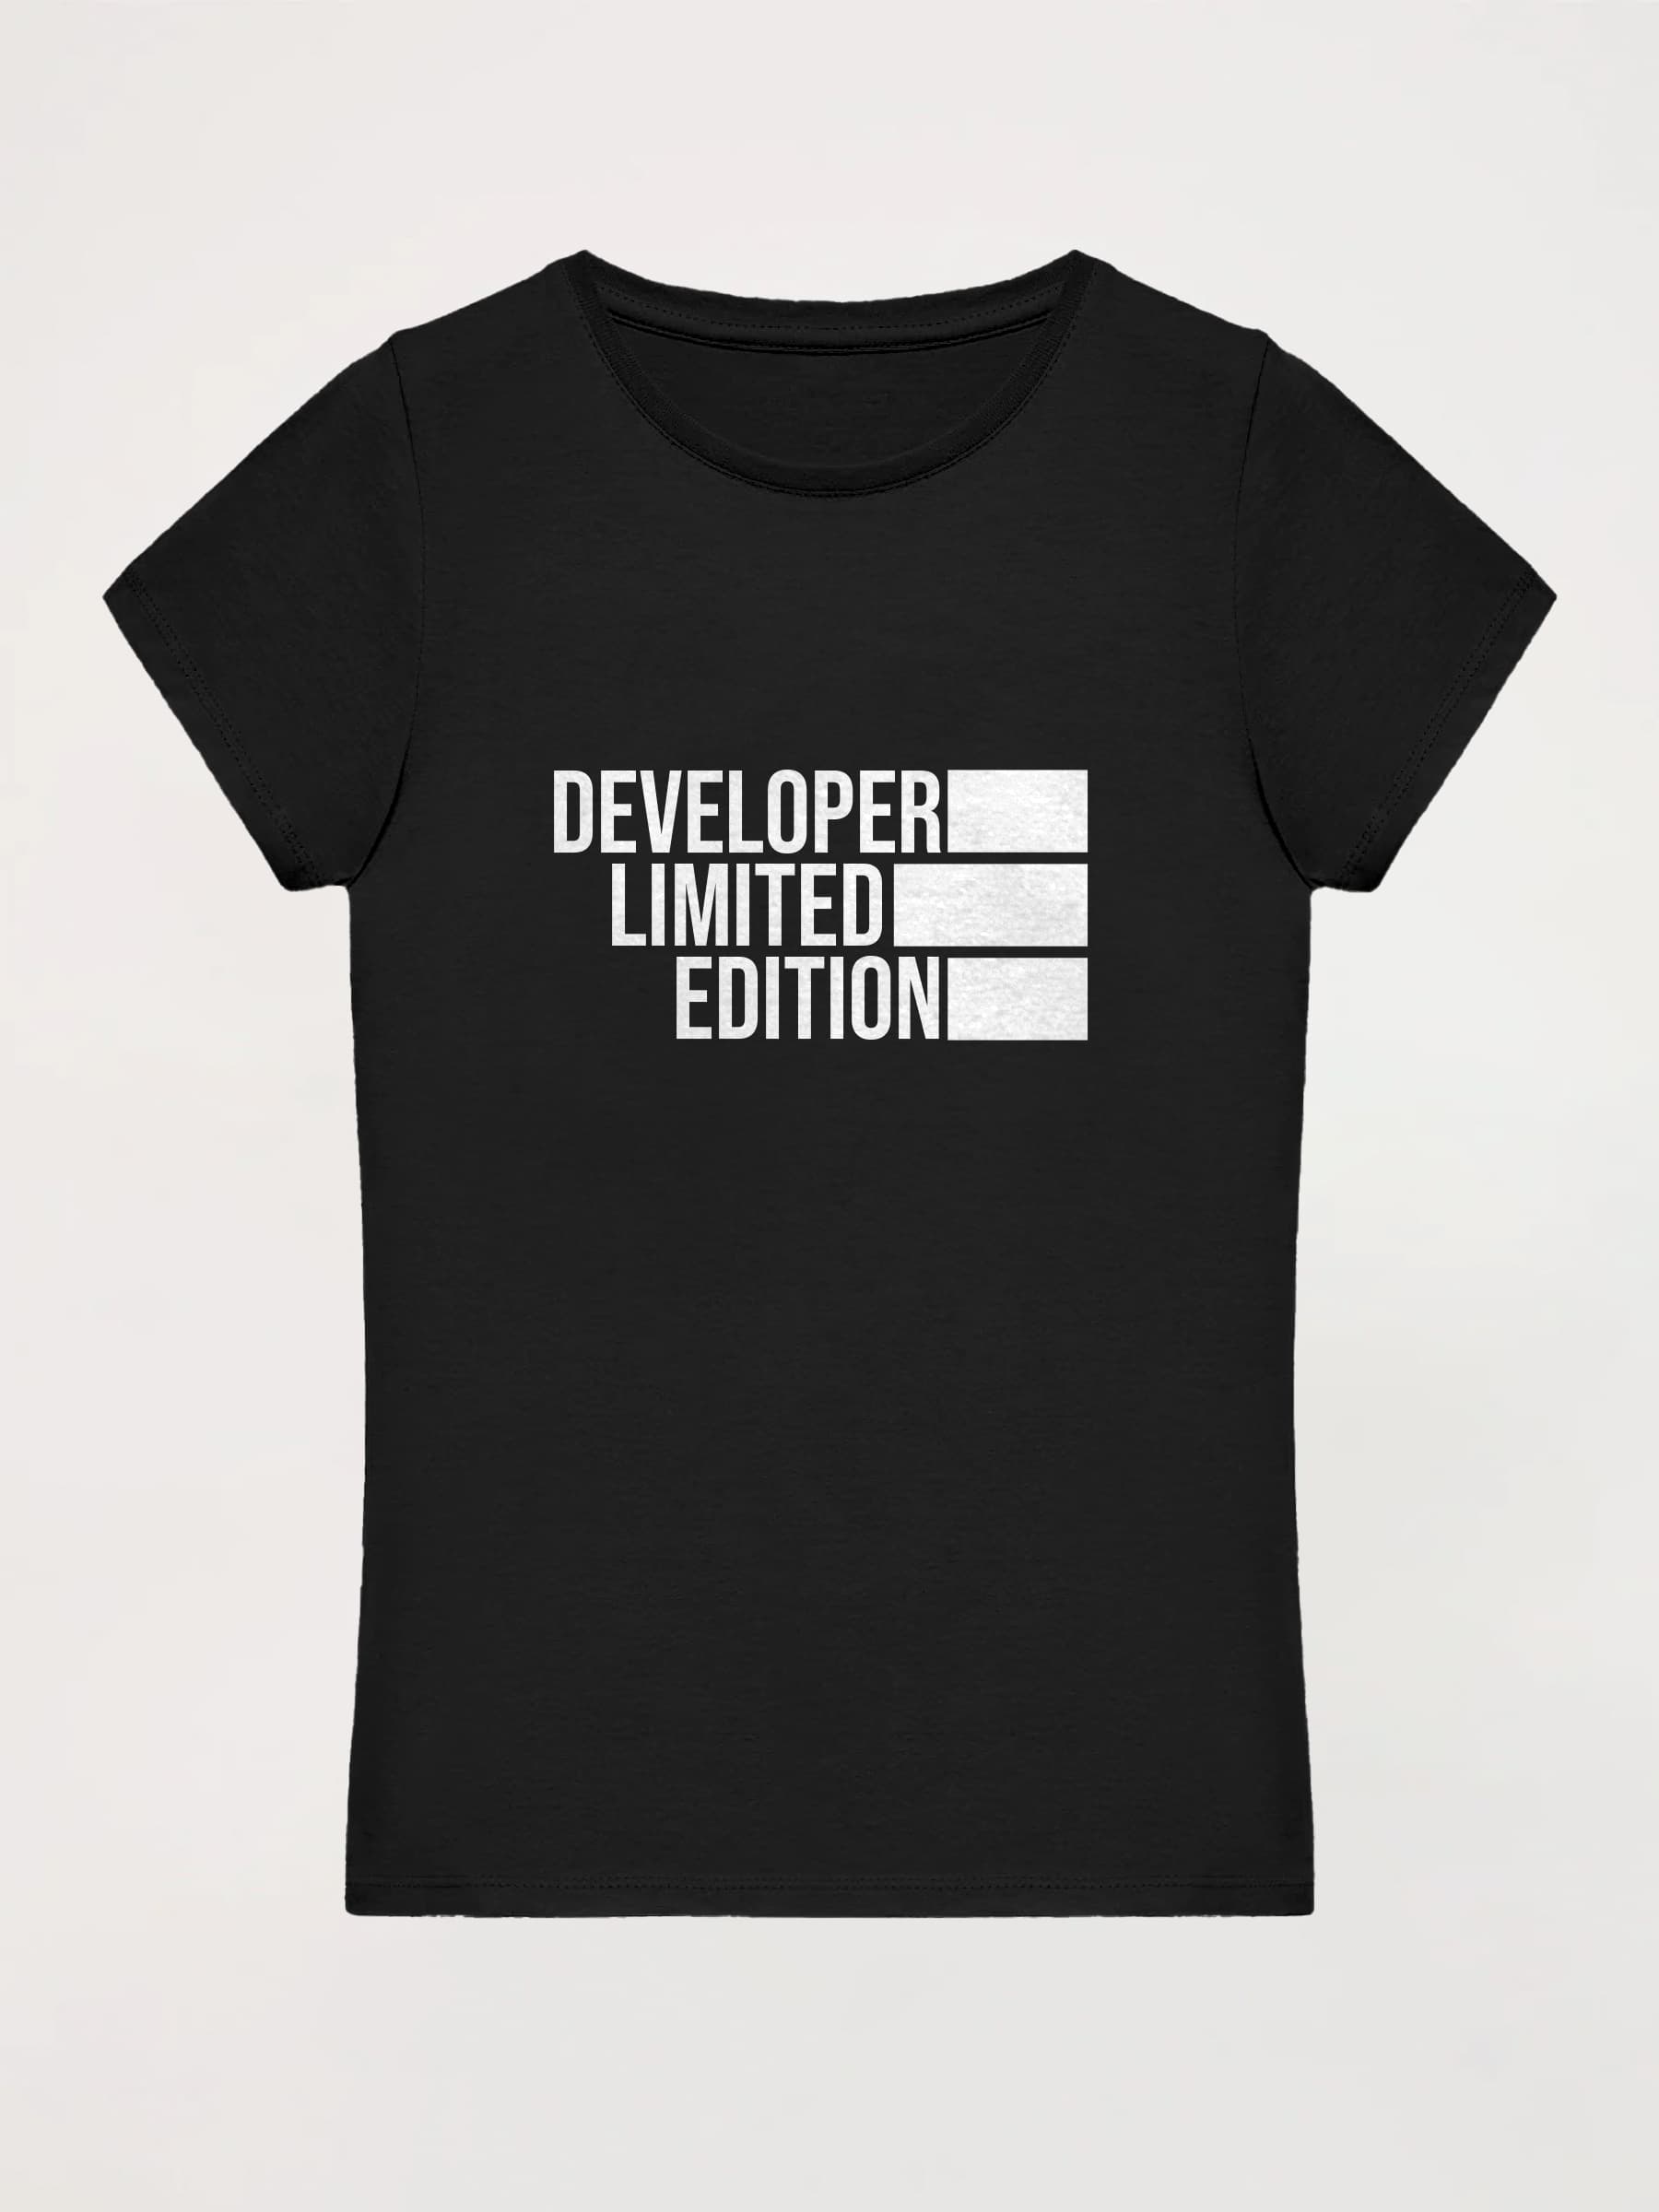 Camiseta mujer Developer Limited Edition